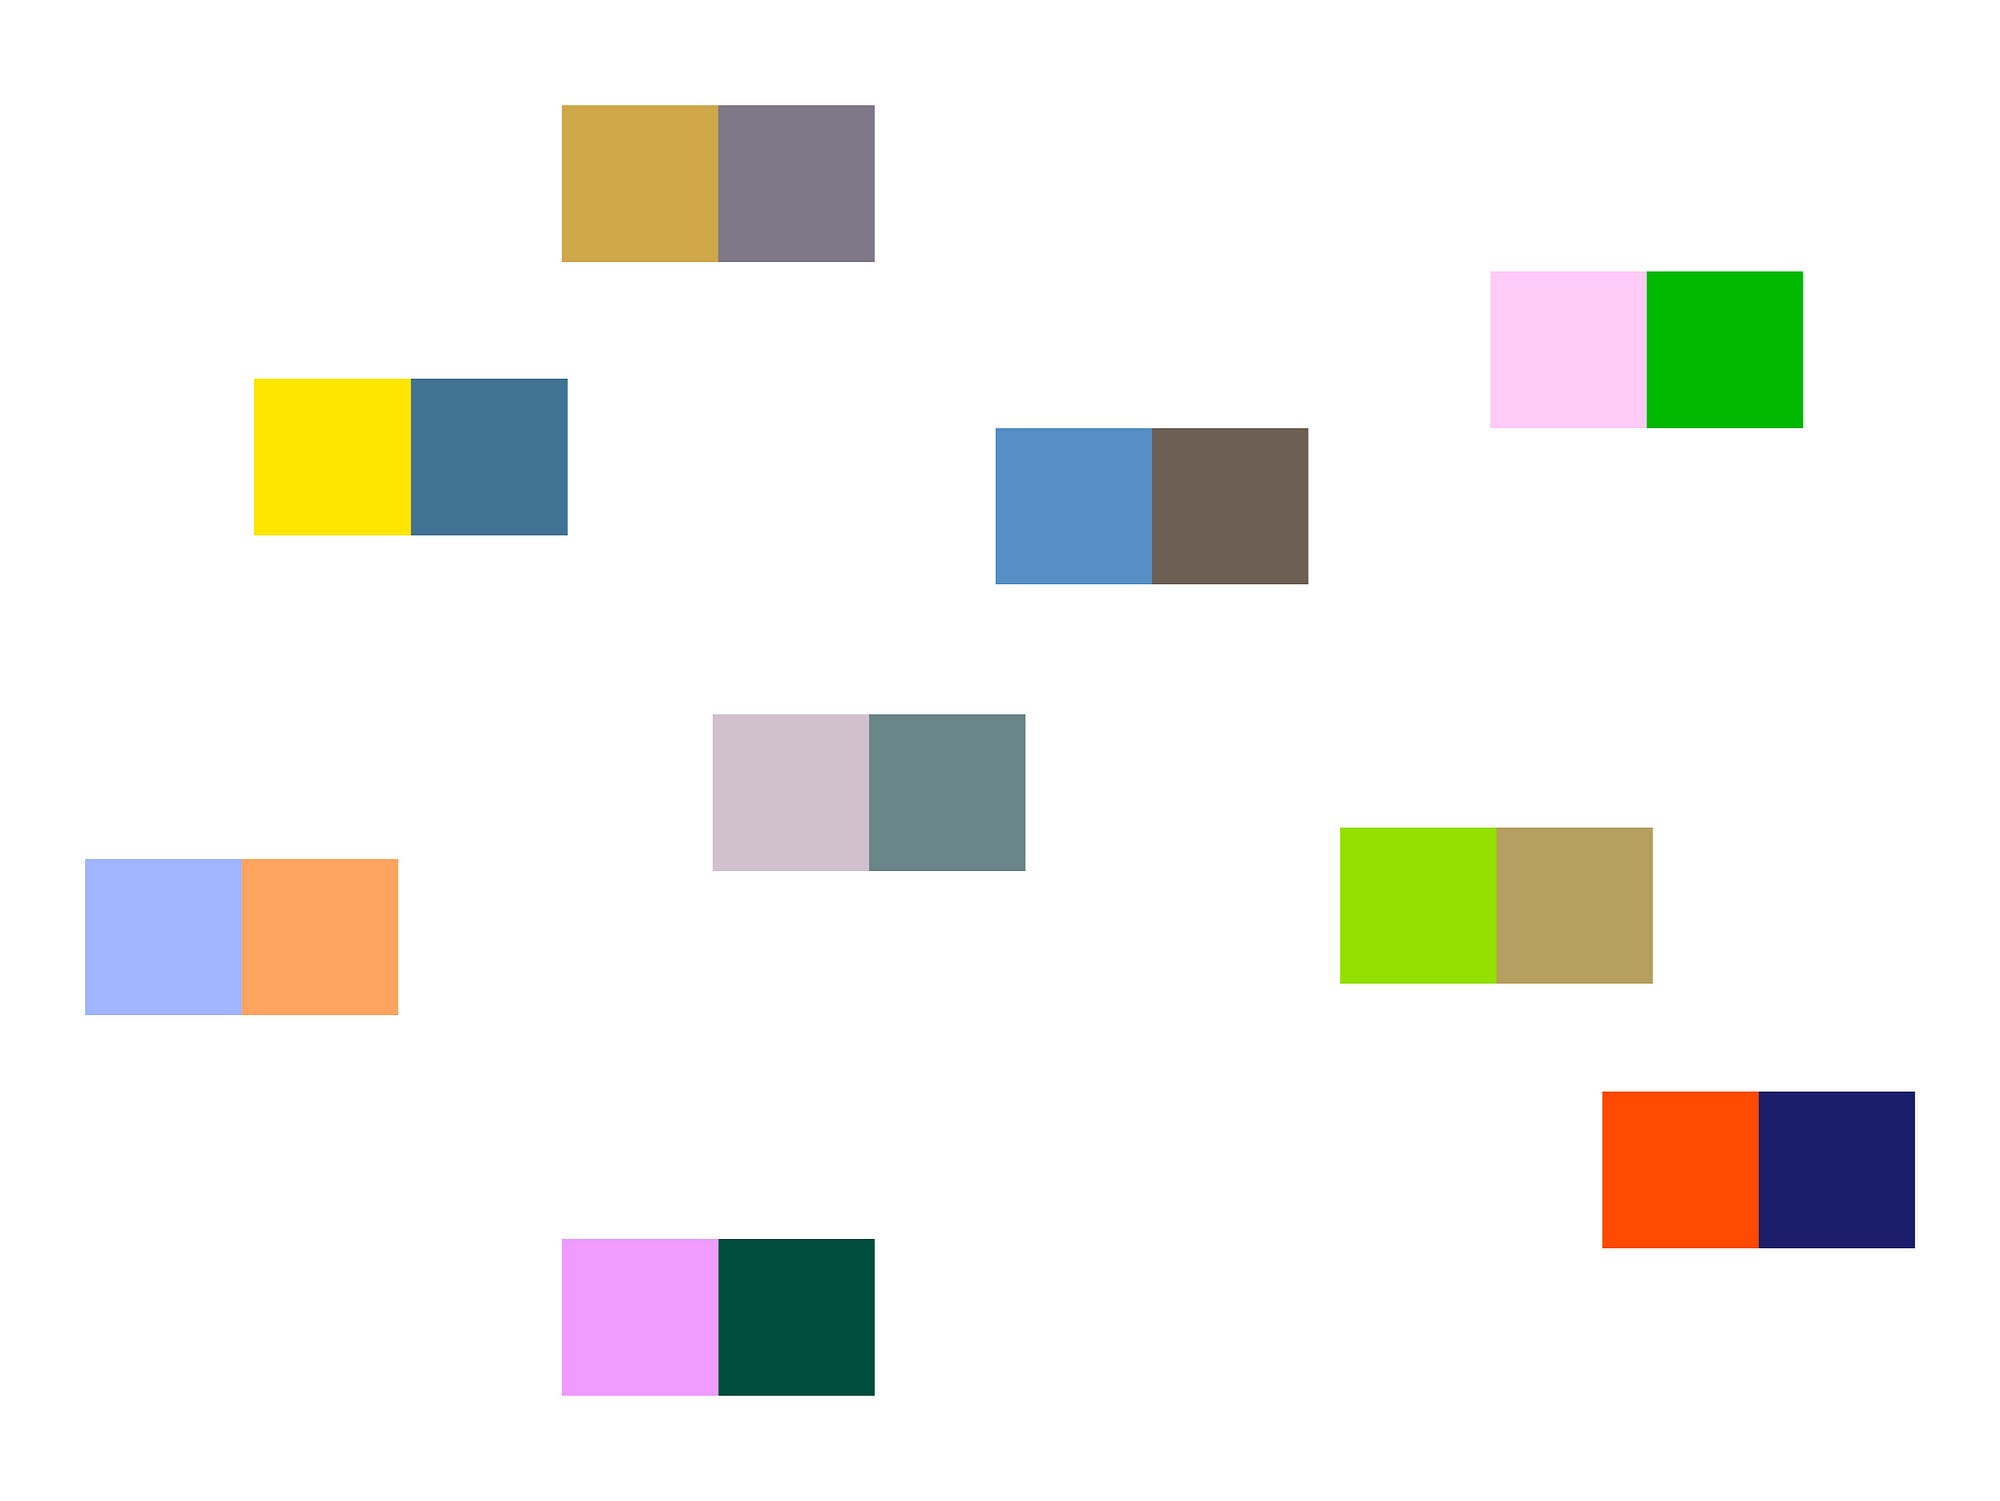 Colorations® Felt Sheets - 10 Colors (Each 9 x 12)